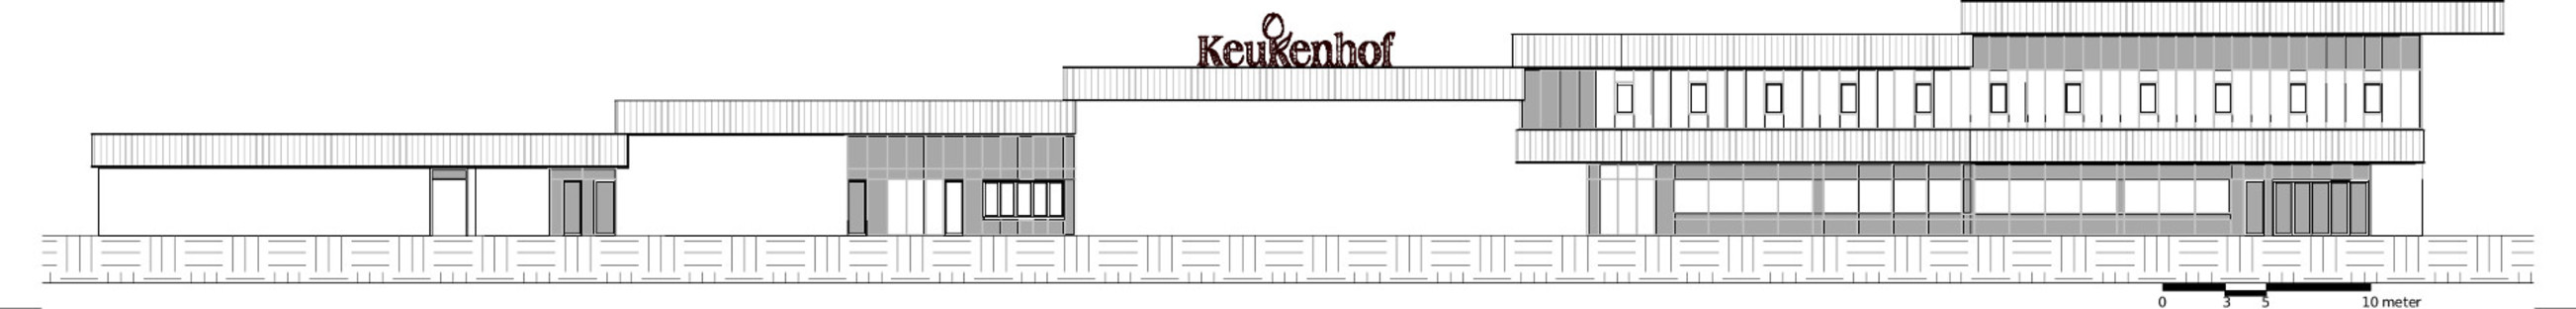 
	A wooden frame for the new Keukenhof Garden gatehouse - Mecanoo Architecten

